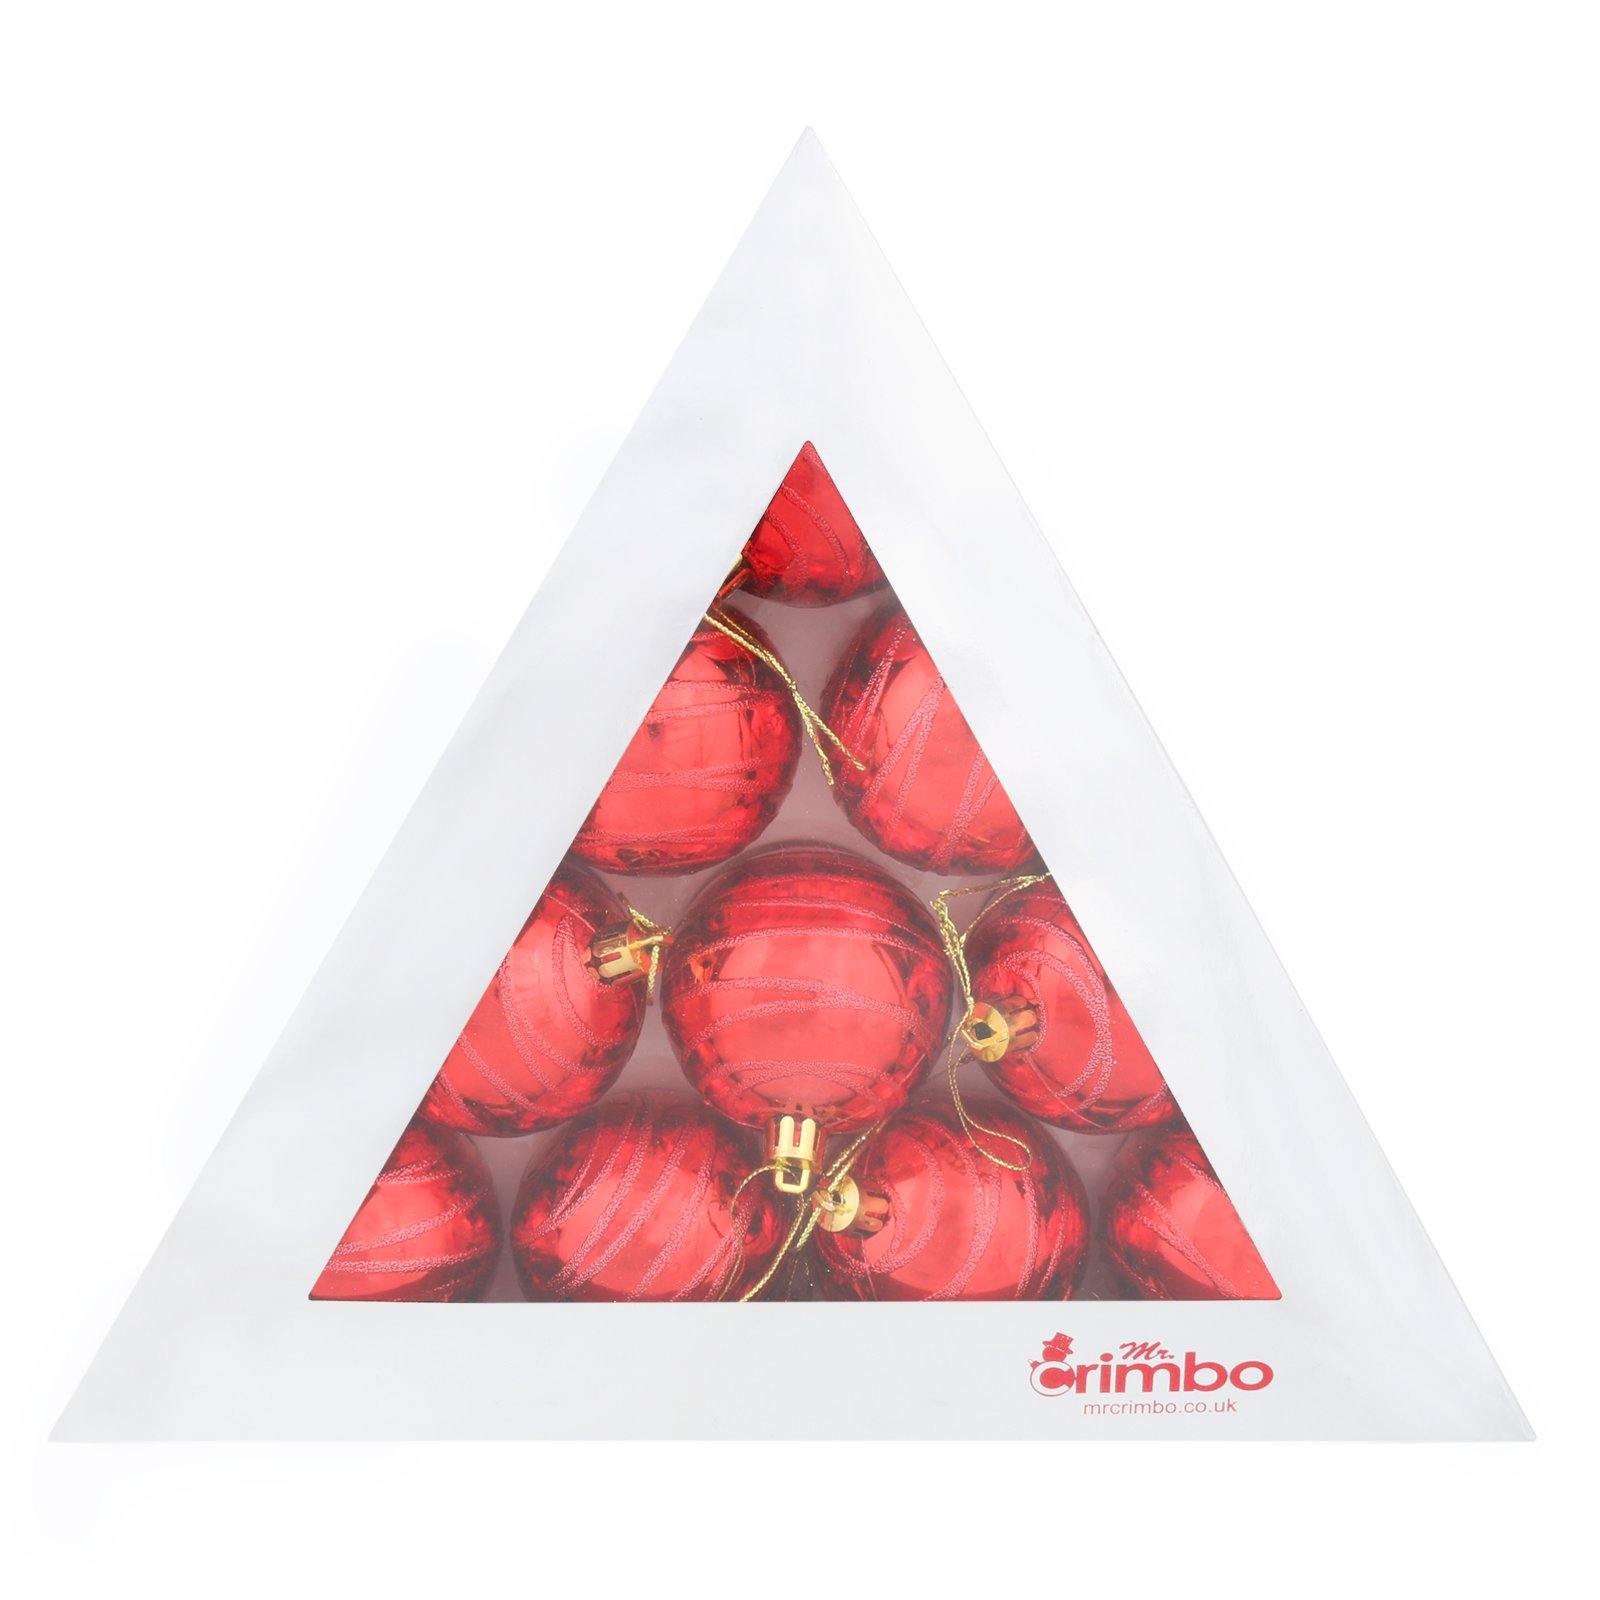 Mr Crimbo 10 x 6cm Mirrored Swirl Christmas Tree Baubles - MrCrimbo.co.uk -XS5705 - Red -Baubles